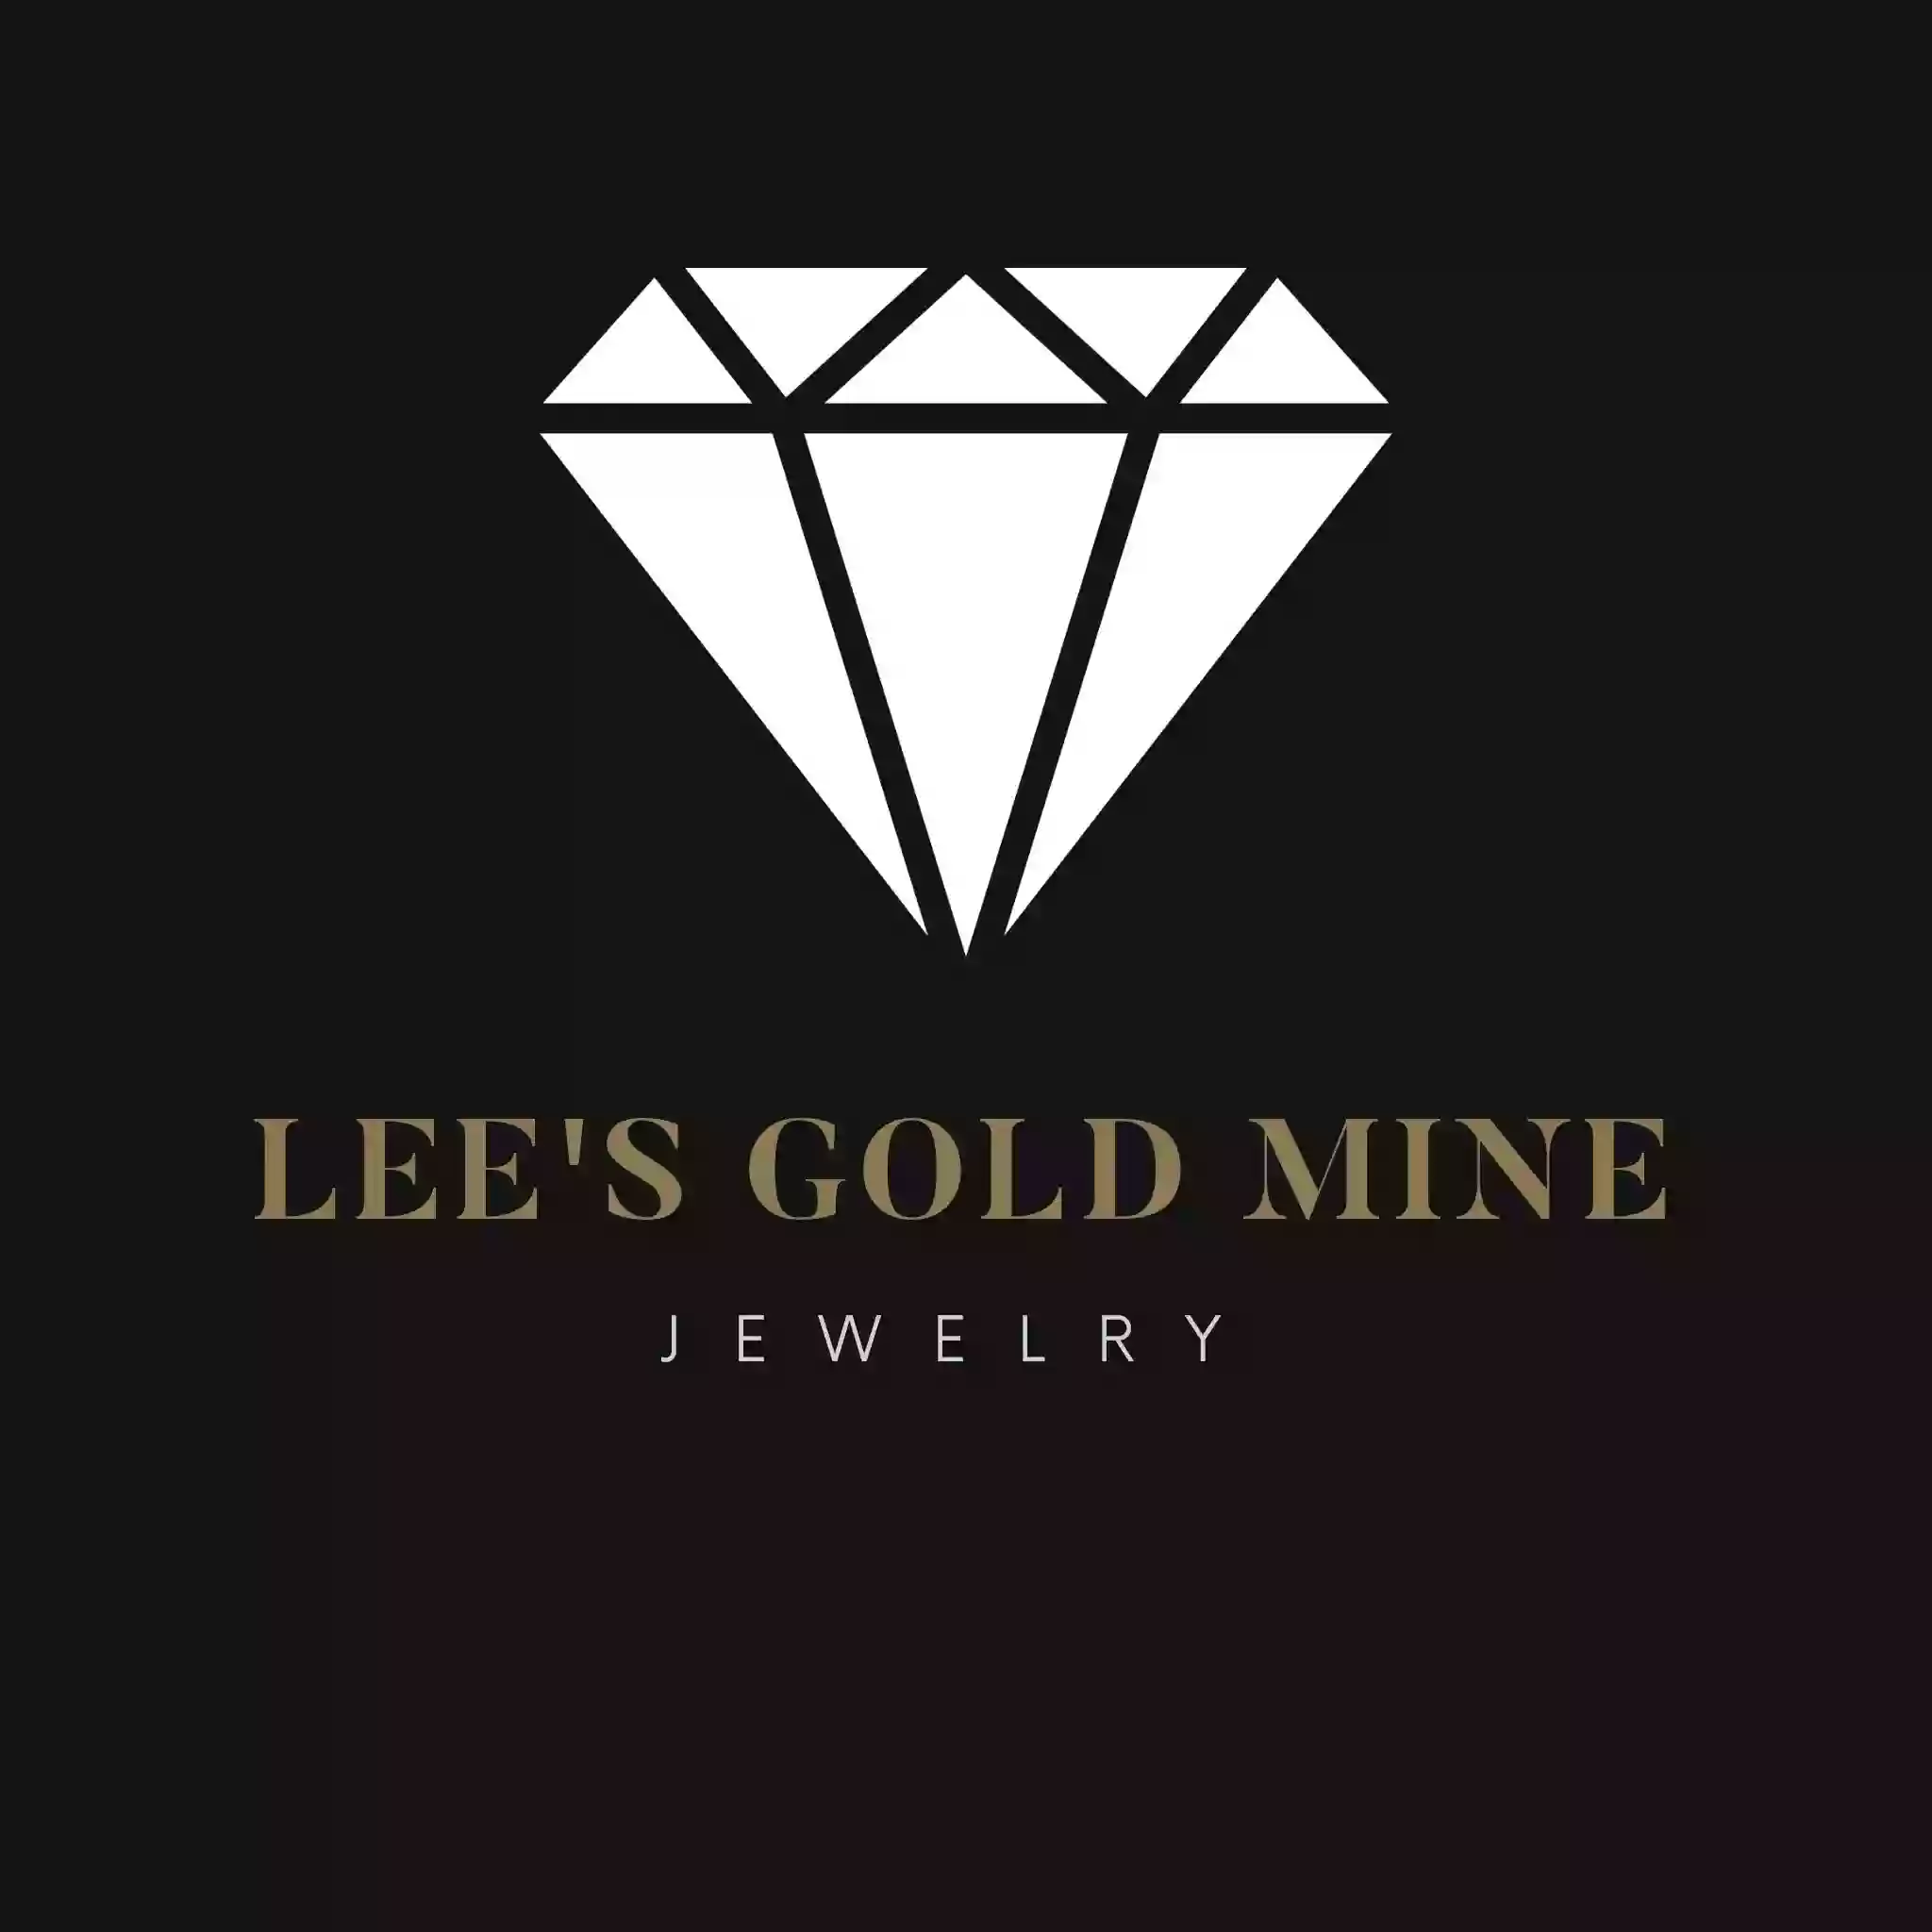 Lee's Gold Mine Jewelry